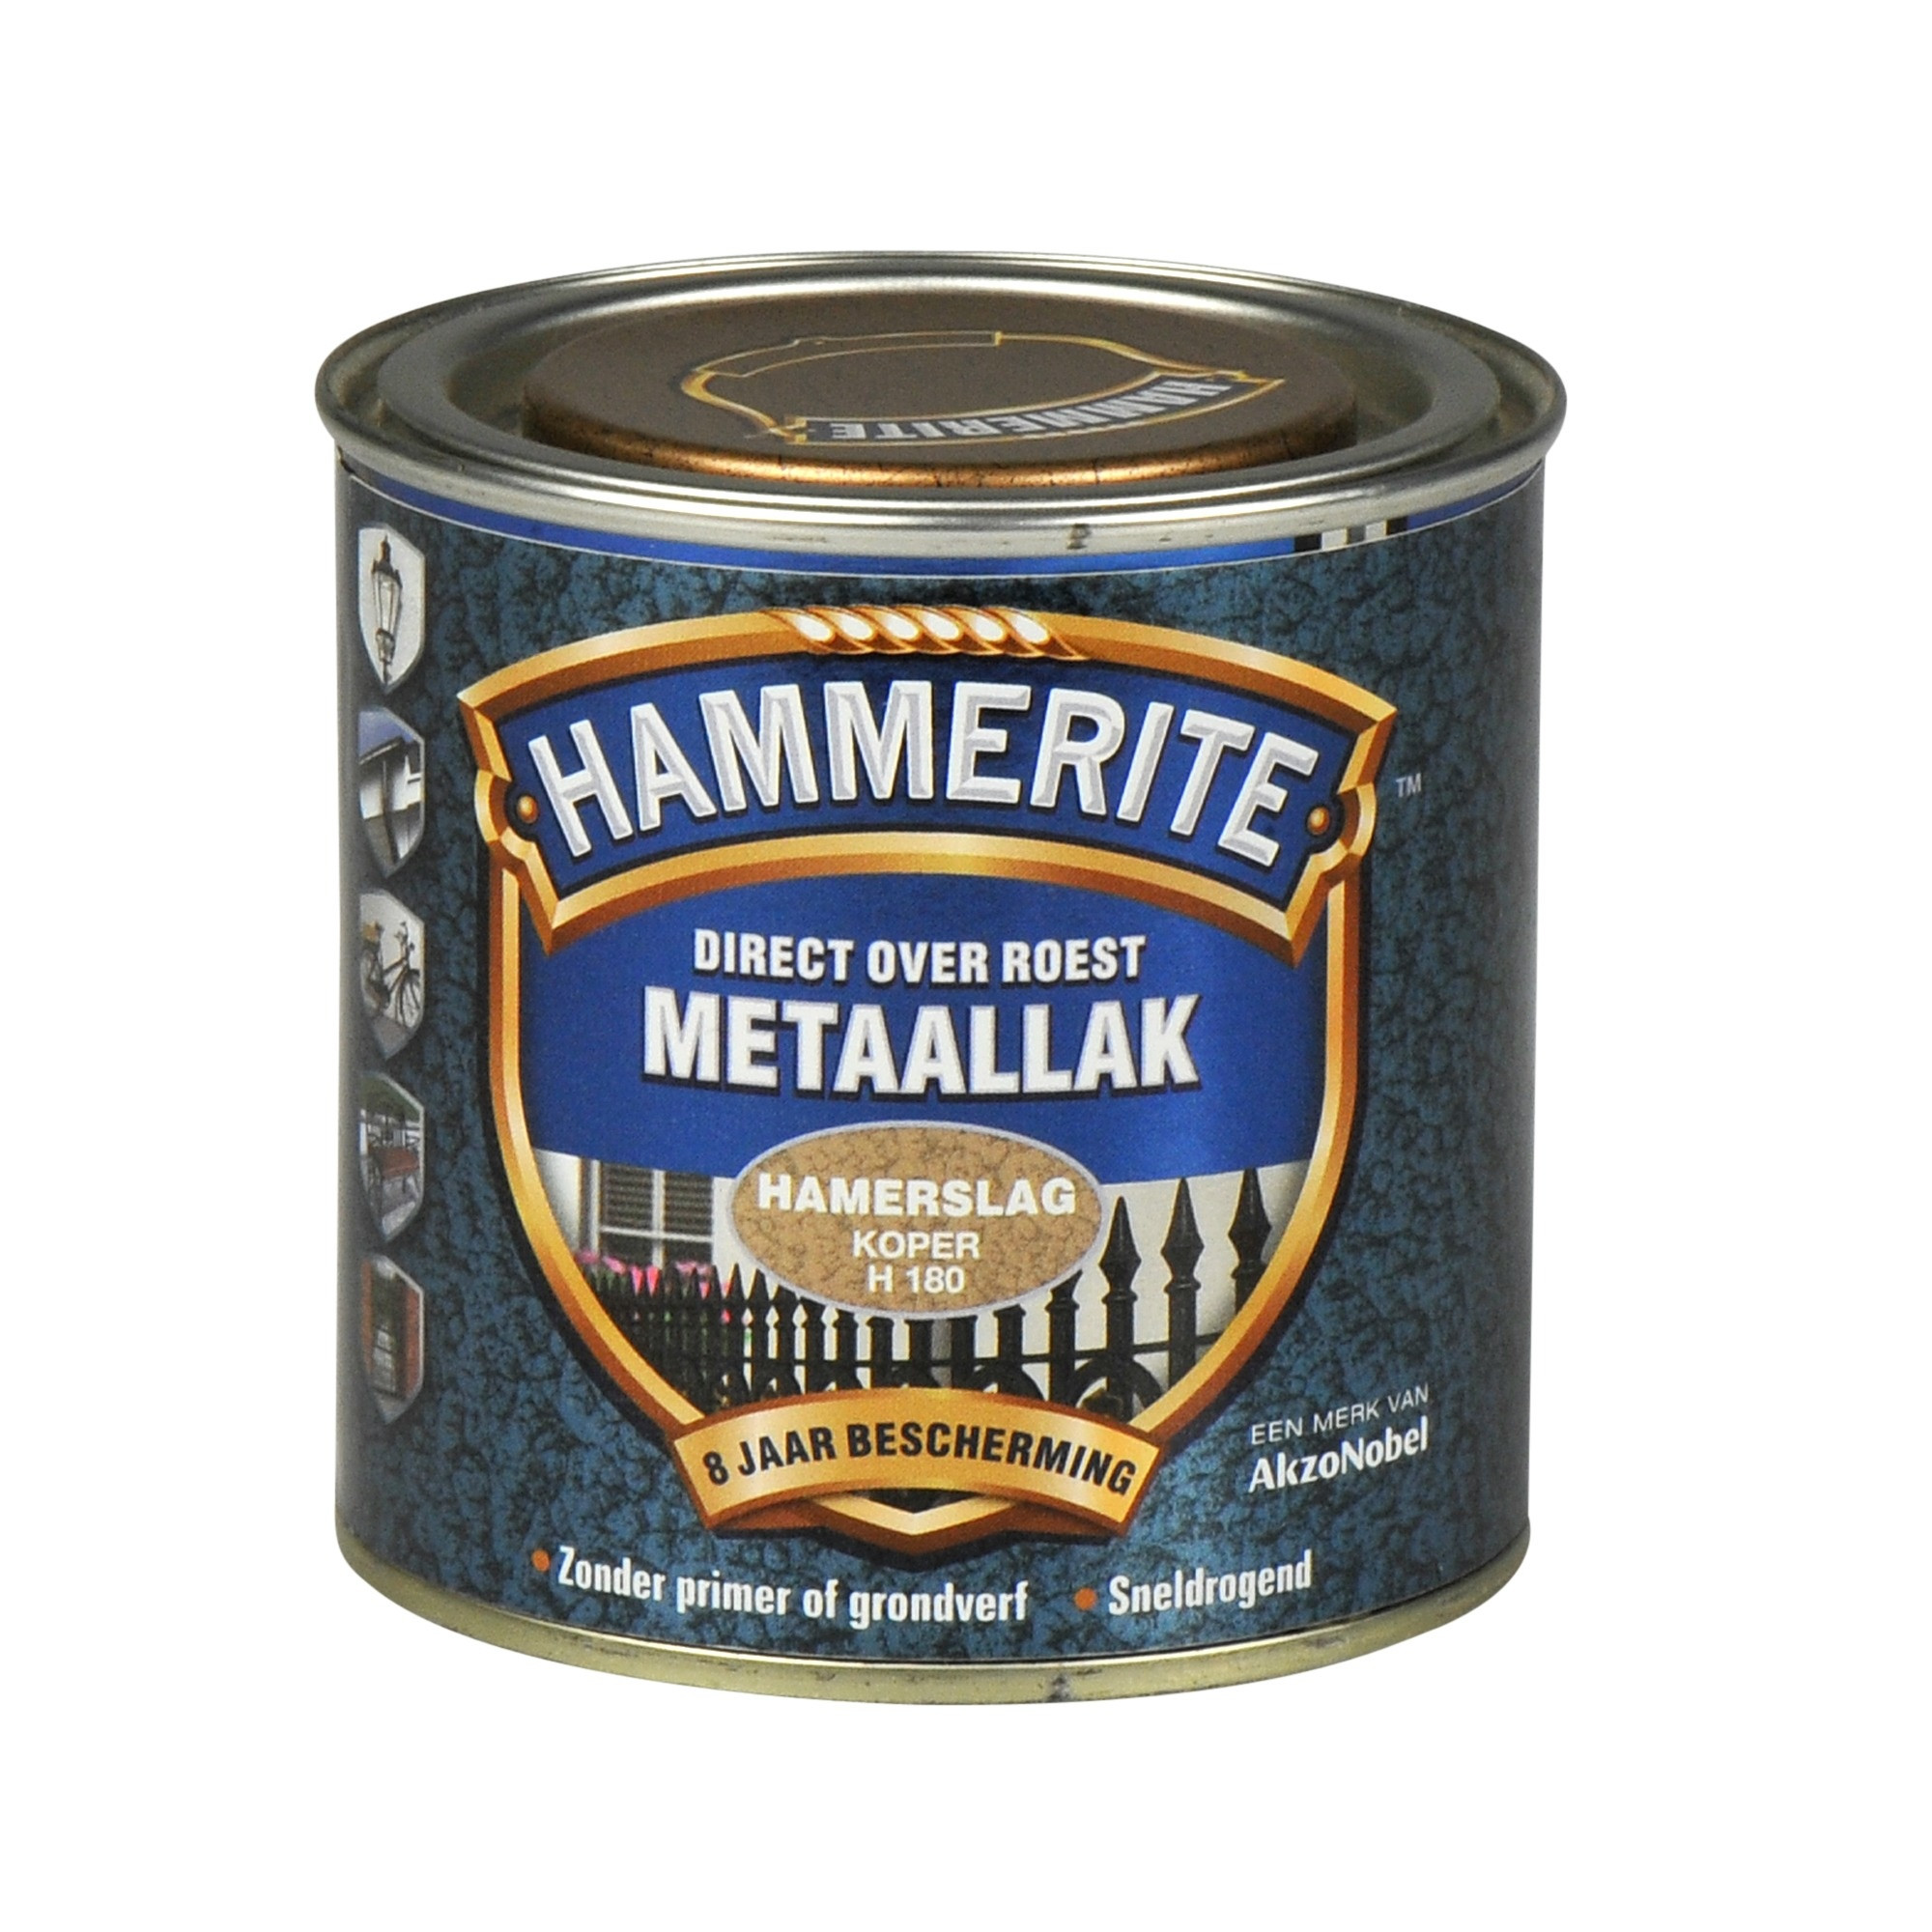 Hammerite Metaallak Direct over Roest Hamerslag - H180 Koper